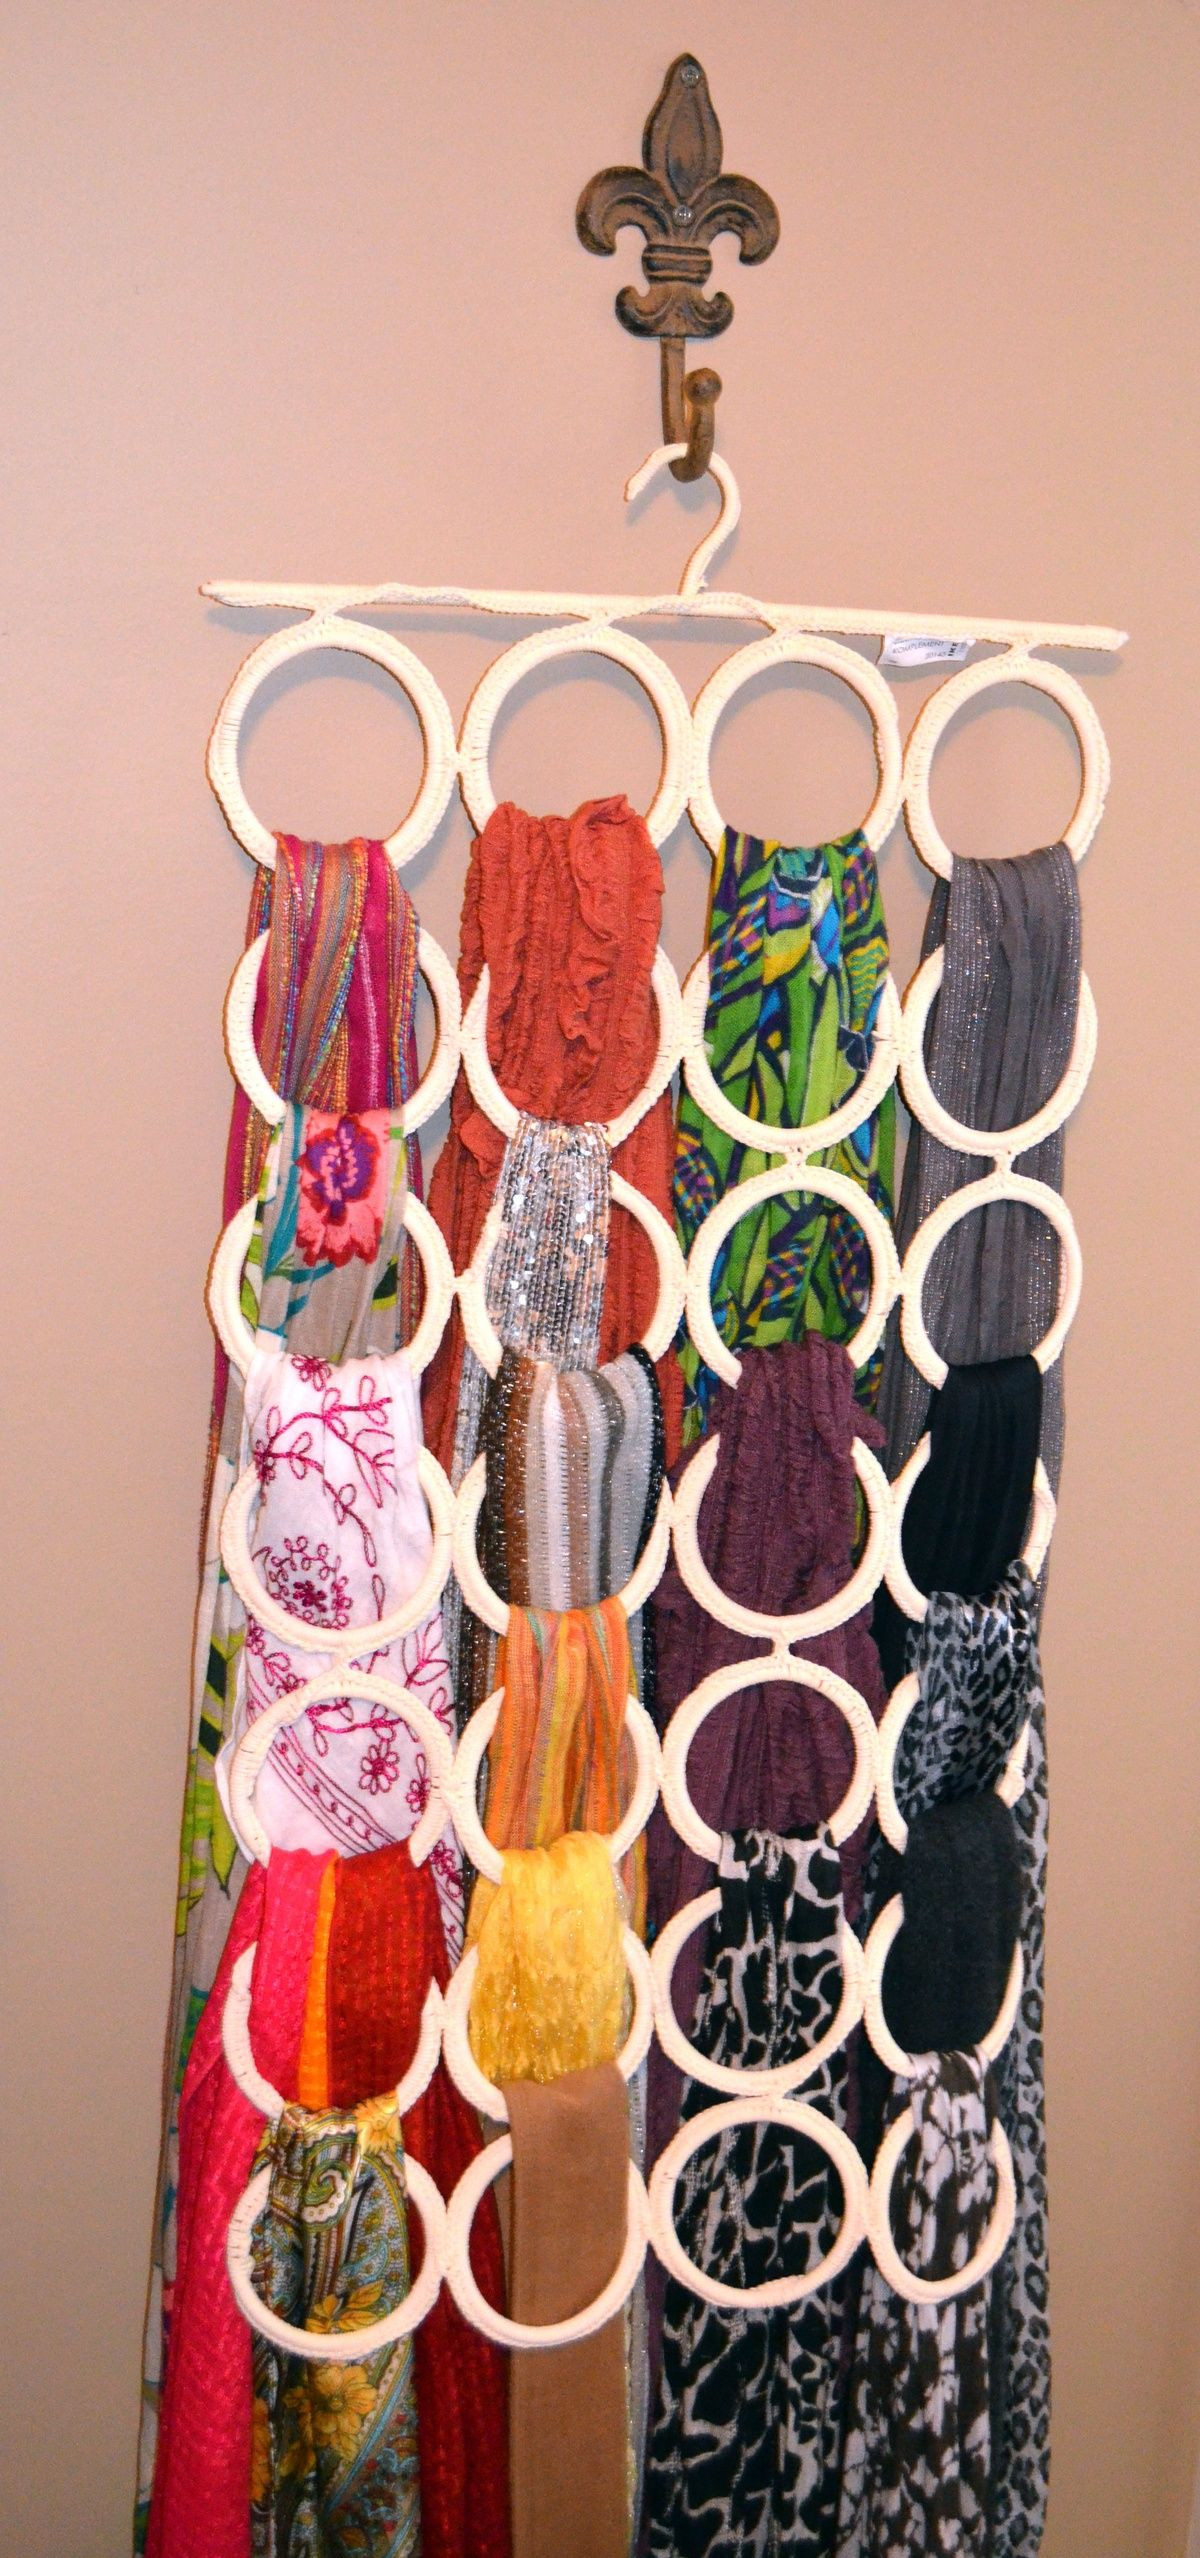 Scarf Organizer DIY
 "Organize my scarves " I m a certified scarf lover